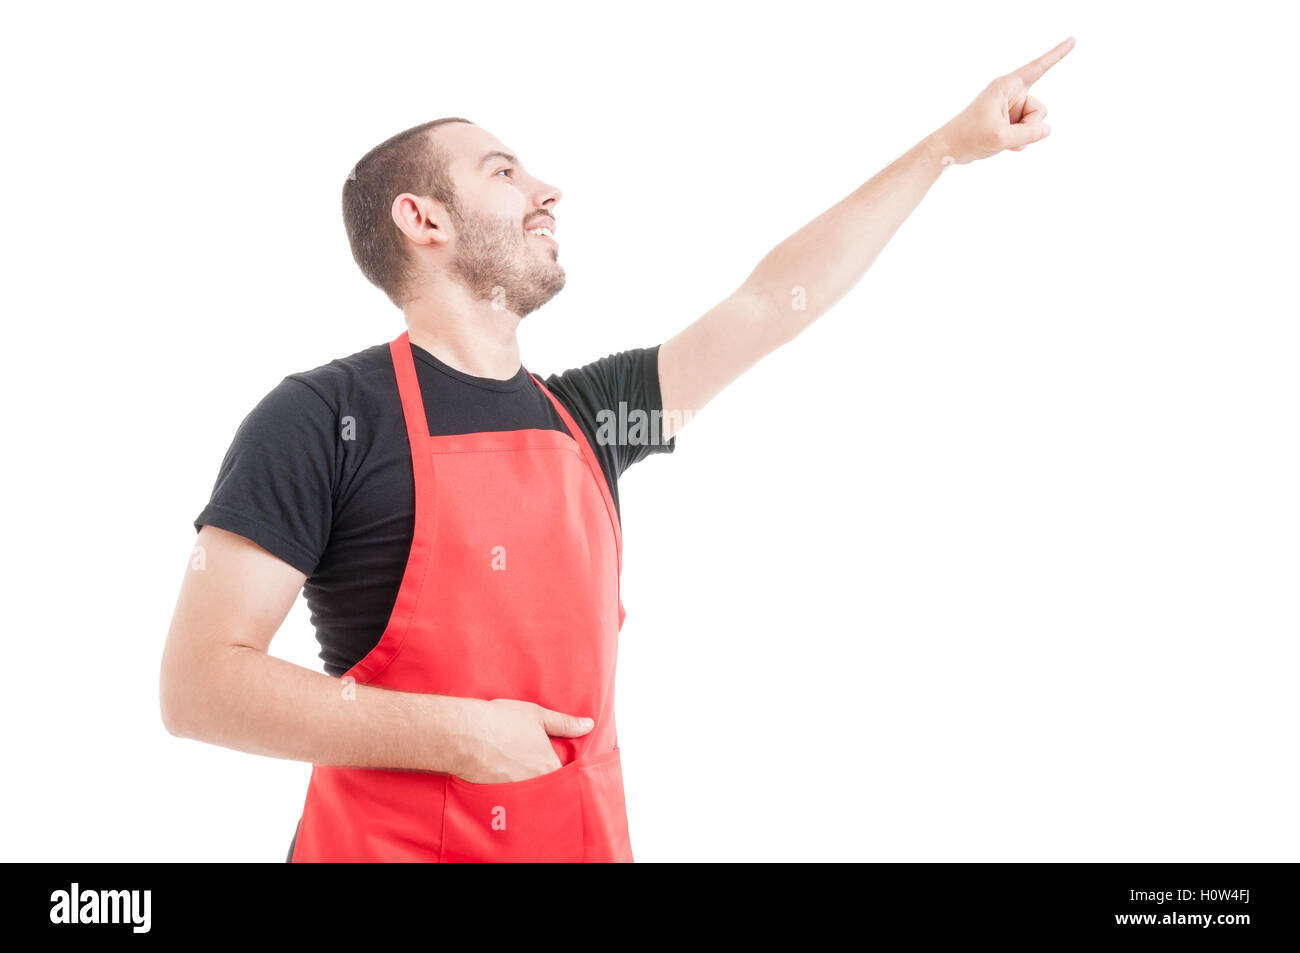 Friendly hypermarket employee pointing up or showing something isolated on white background Stock Photo